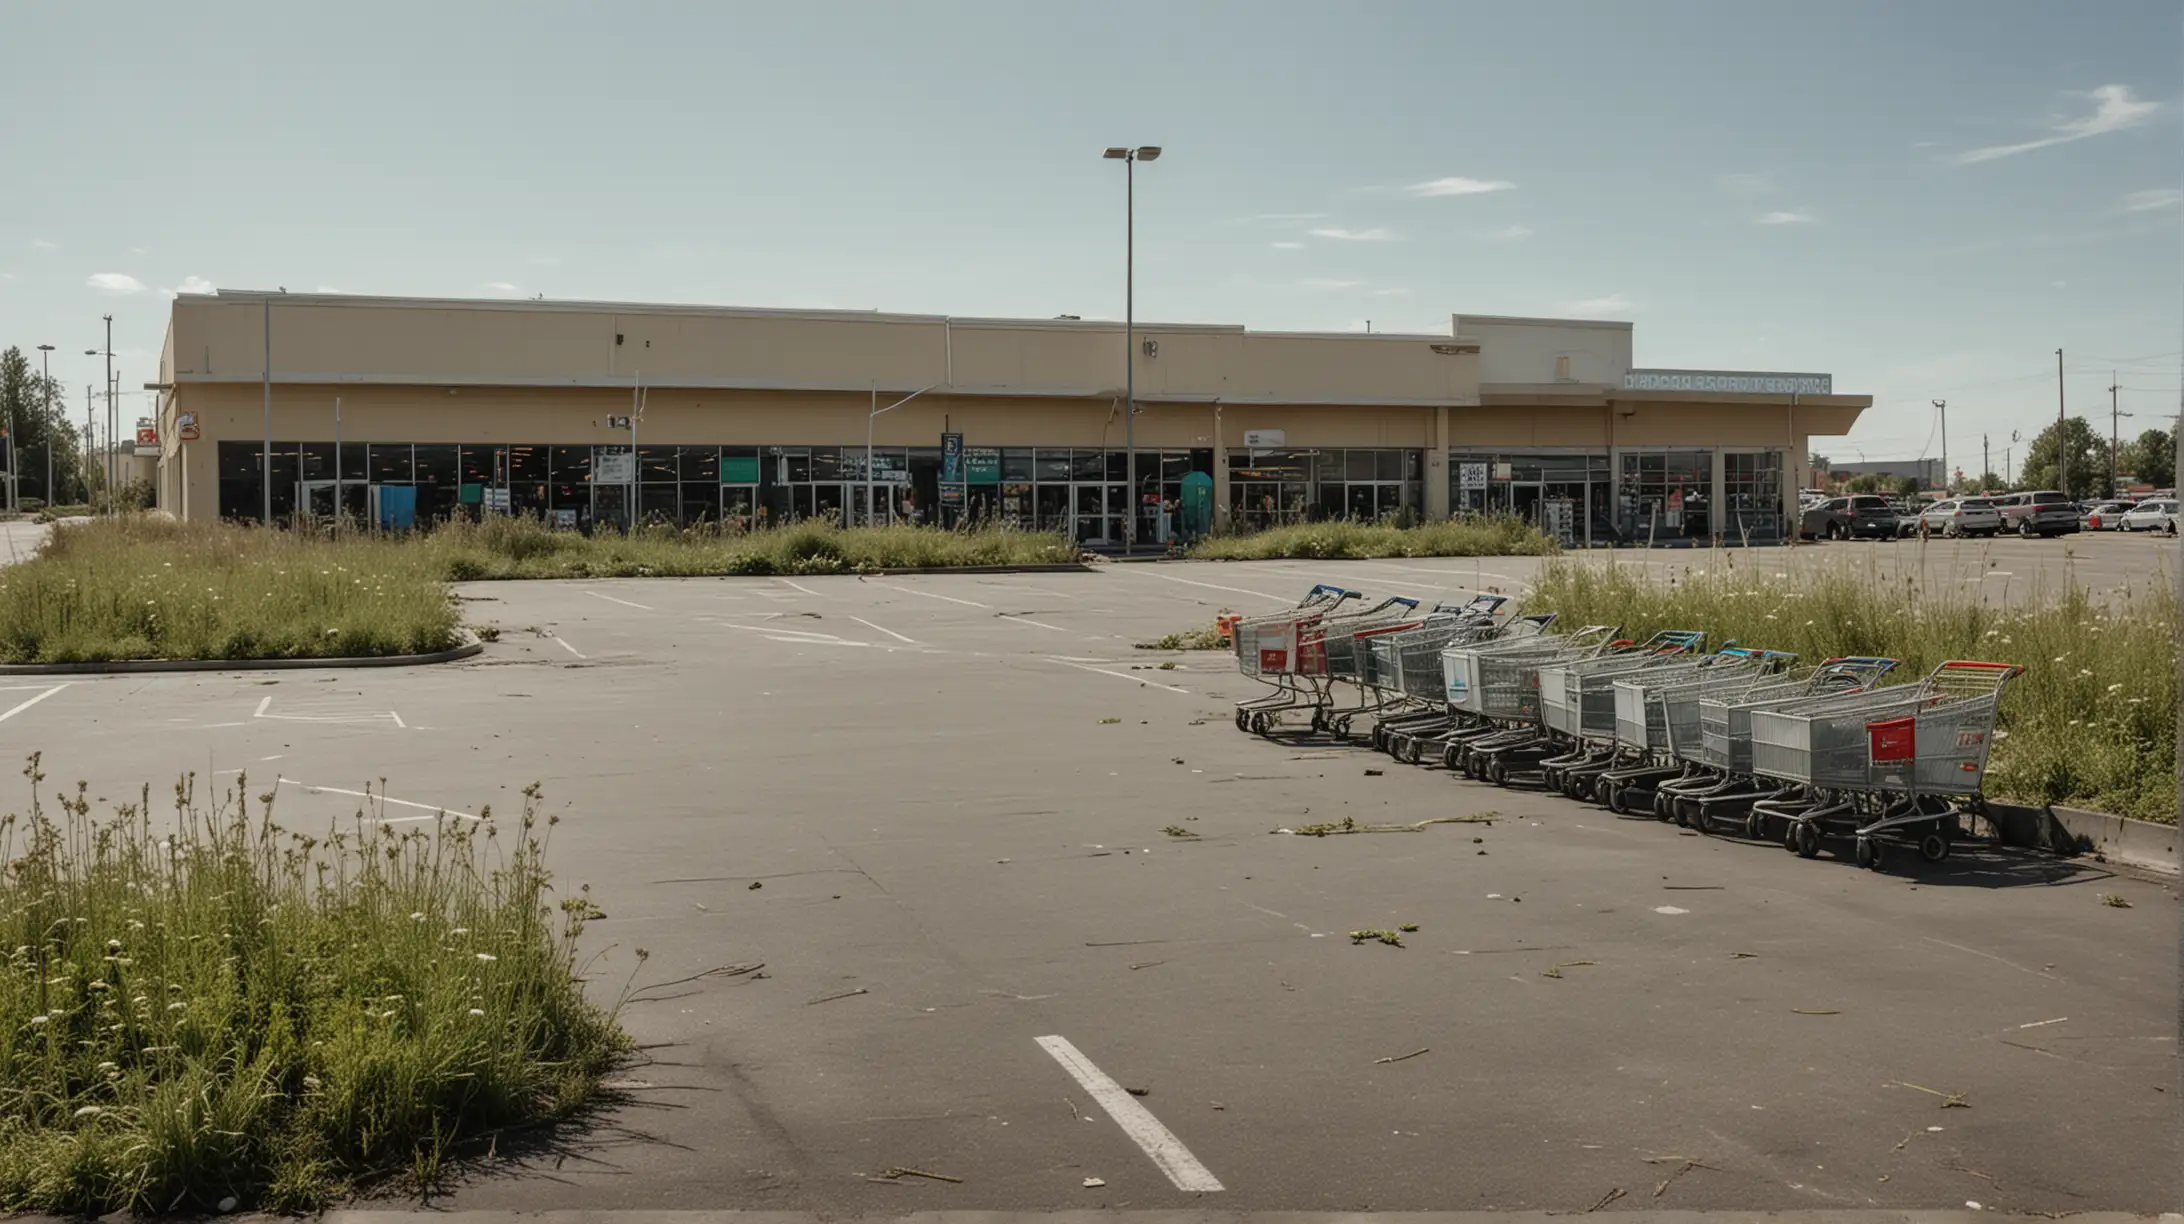 PostApocalyptic Supermarket Scene with Overgrown Parking Lot